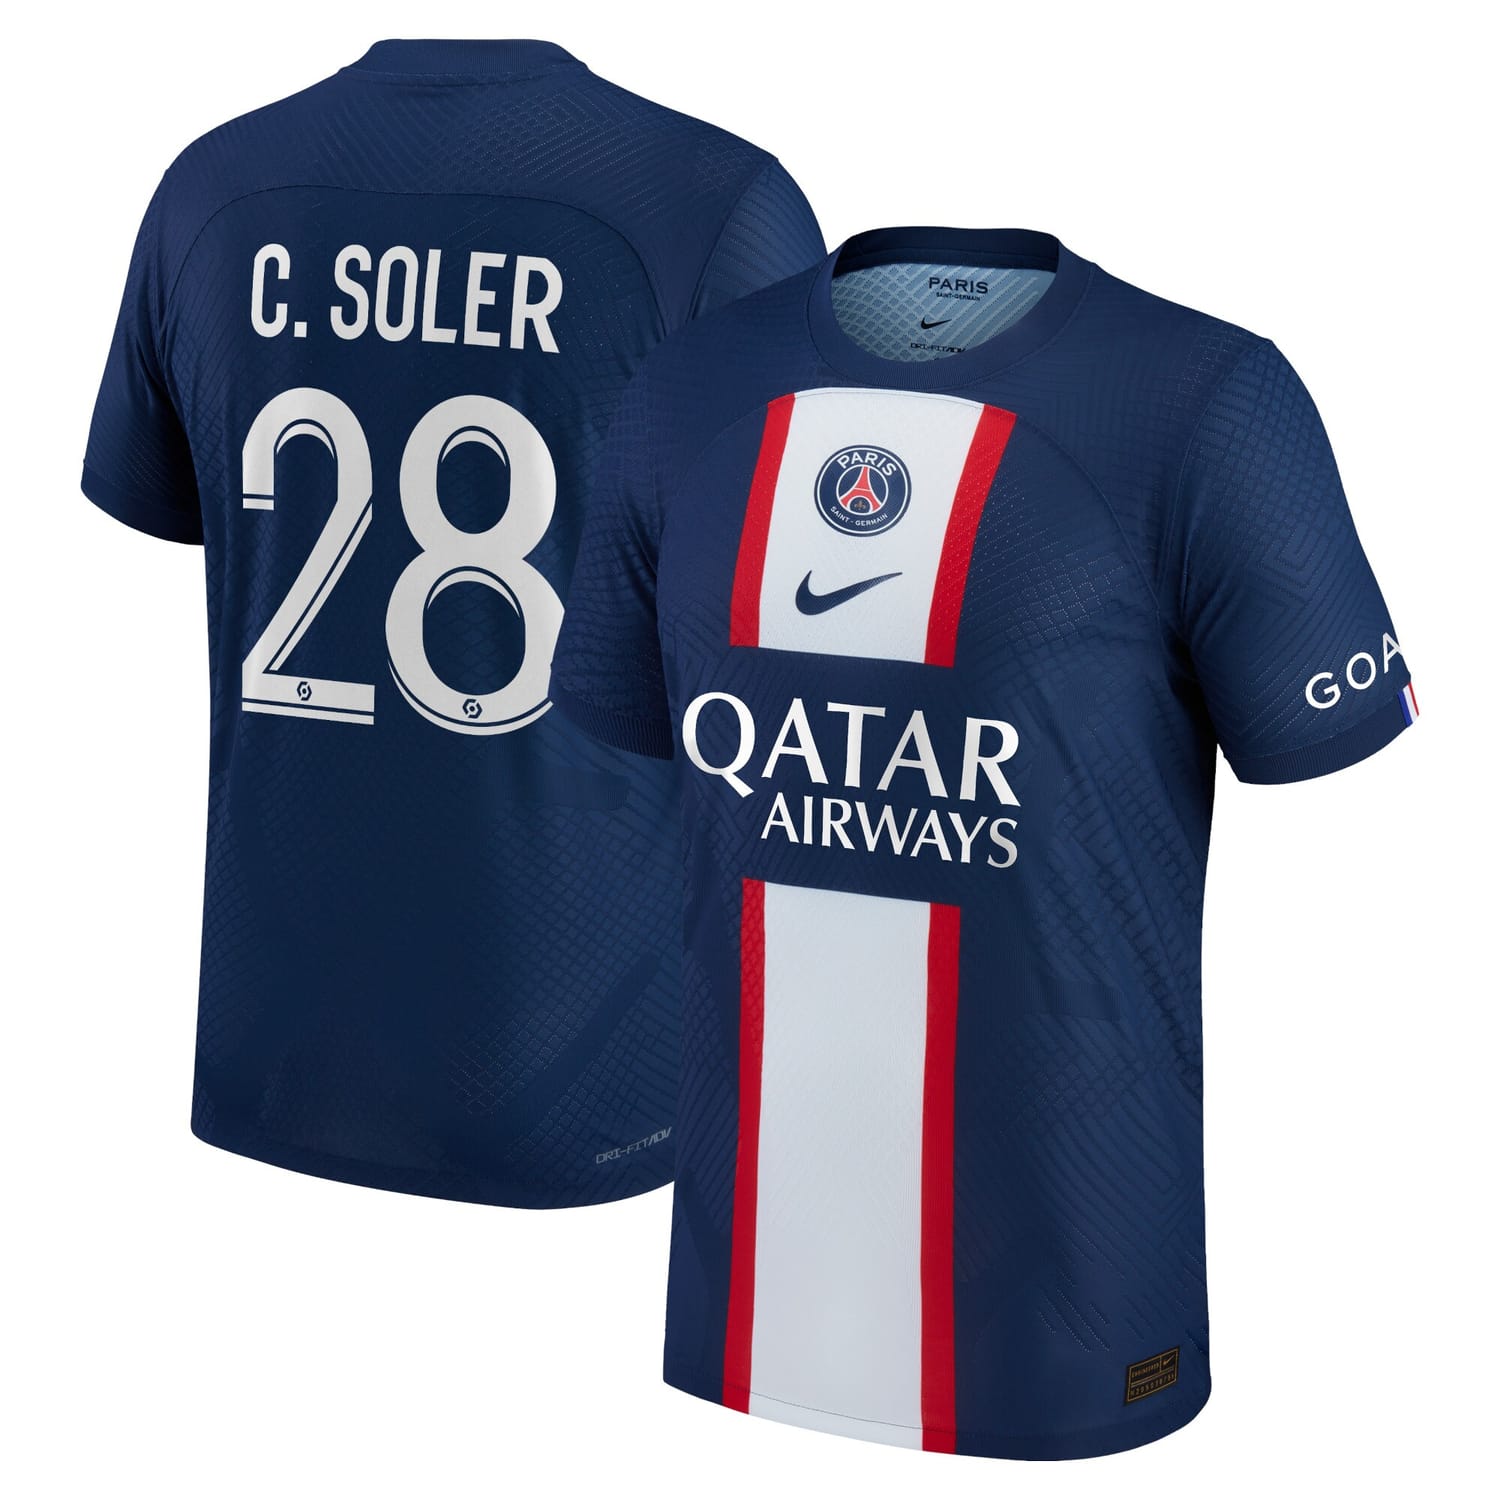 Ligue 1 Paris Saint-Germain Home Authentic Jersey Shirt 2022-23 player Carlos Soler 28 printing for Men